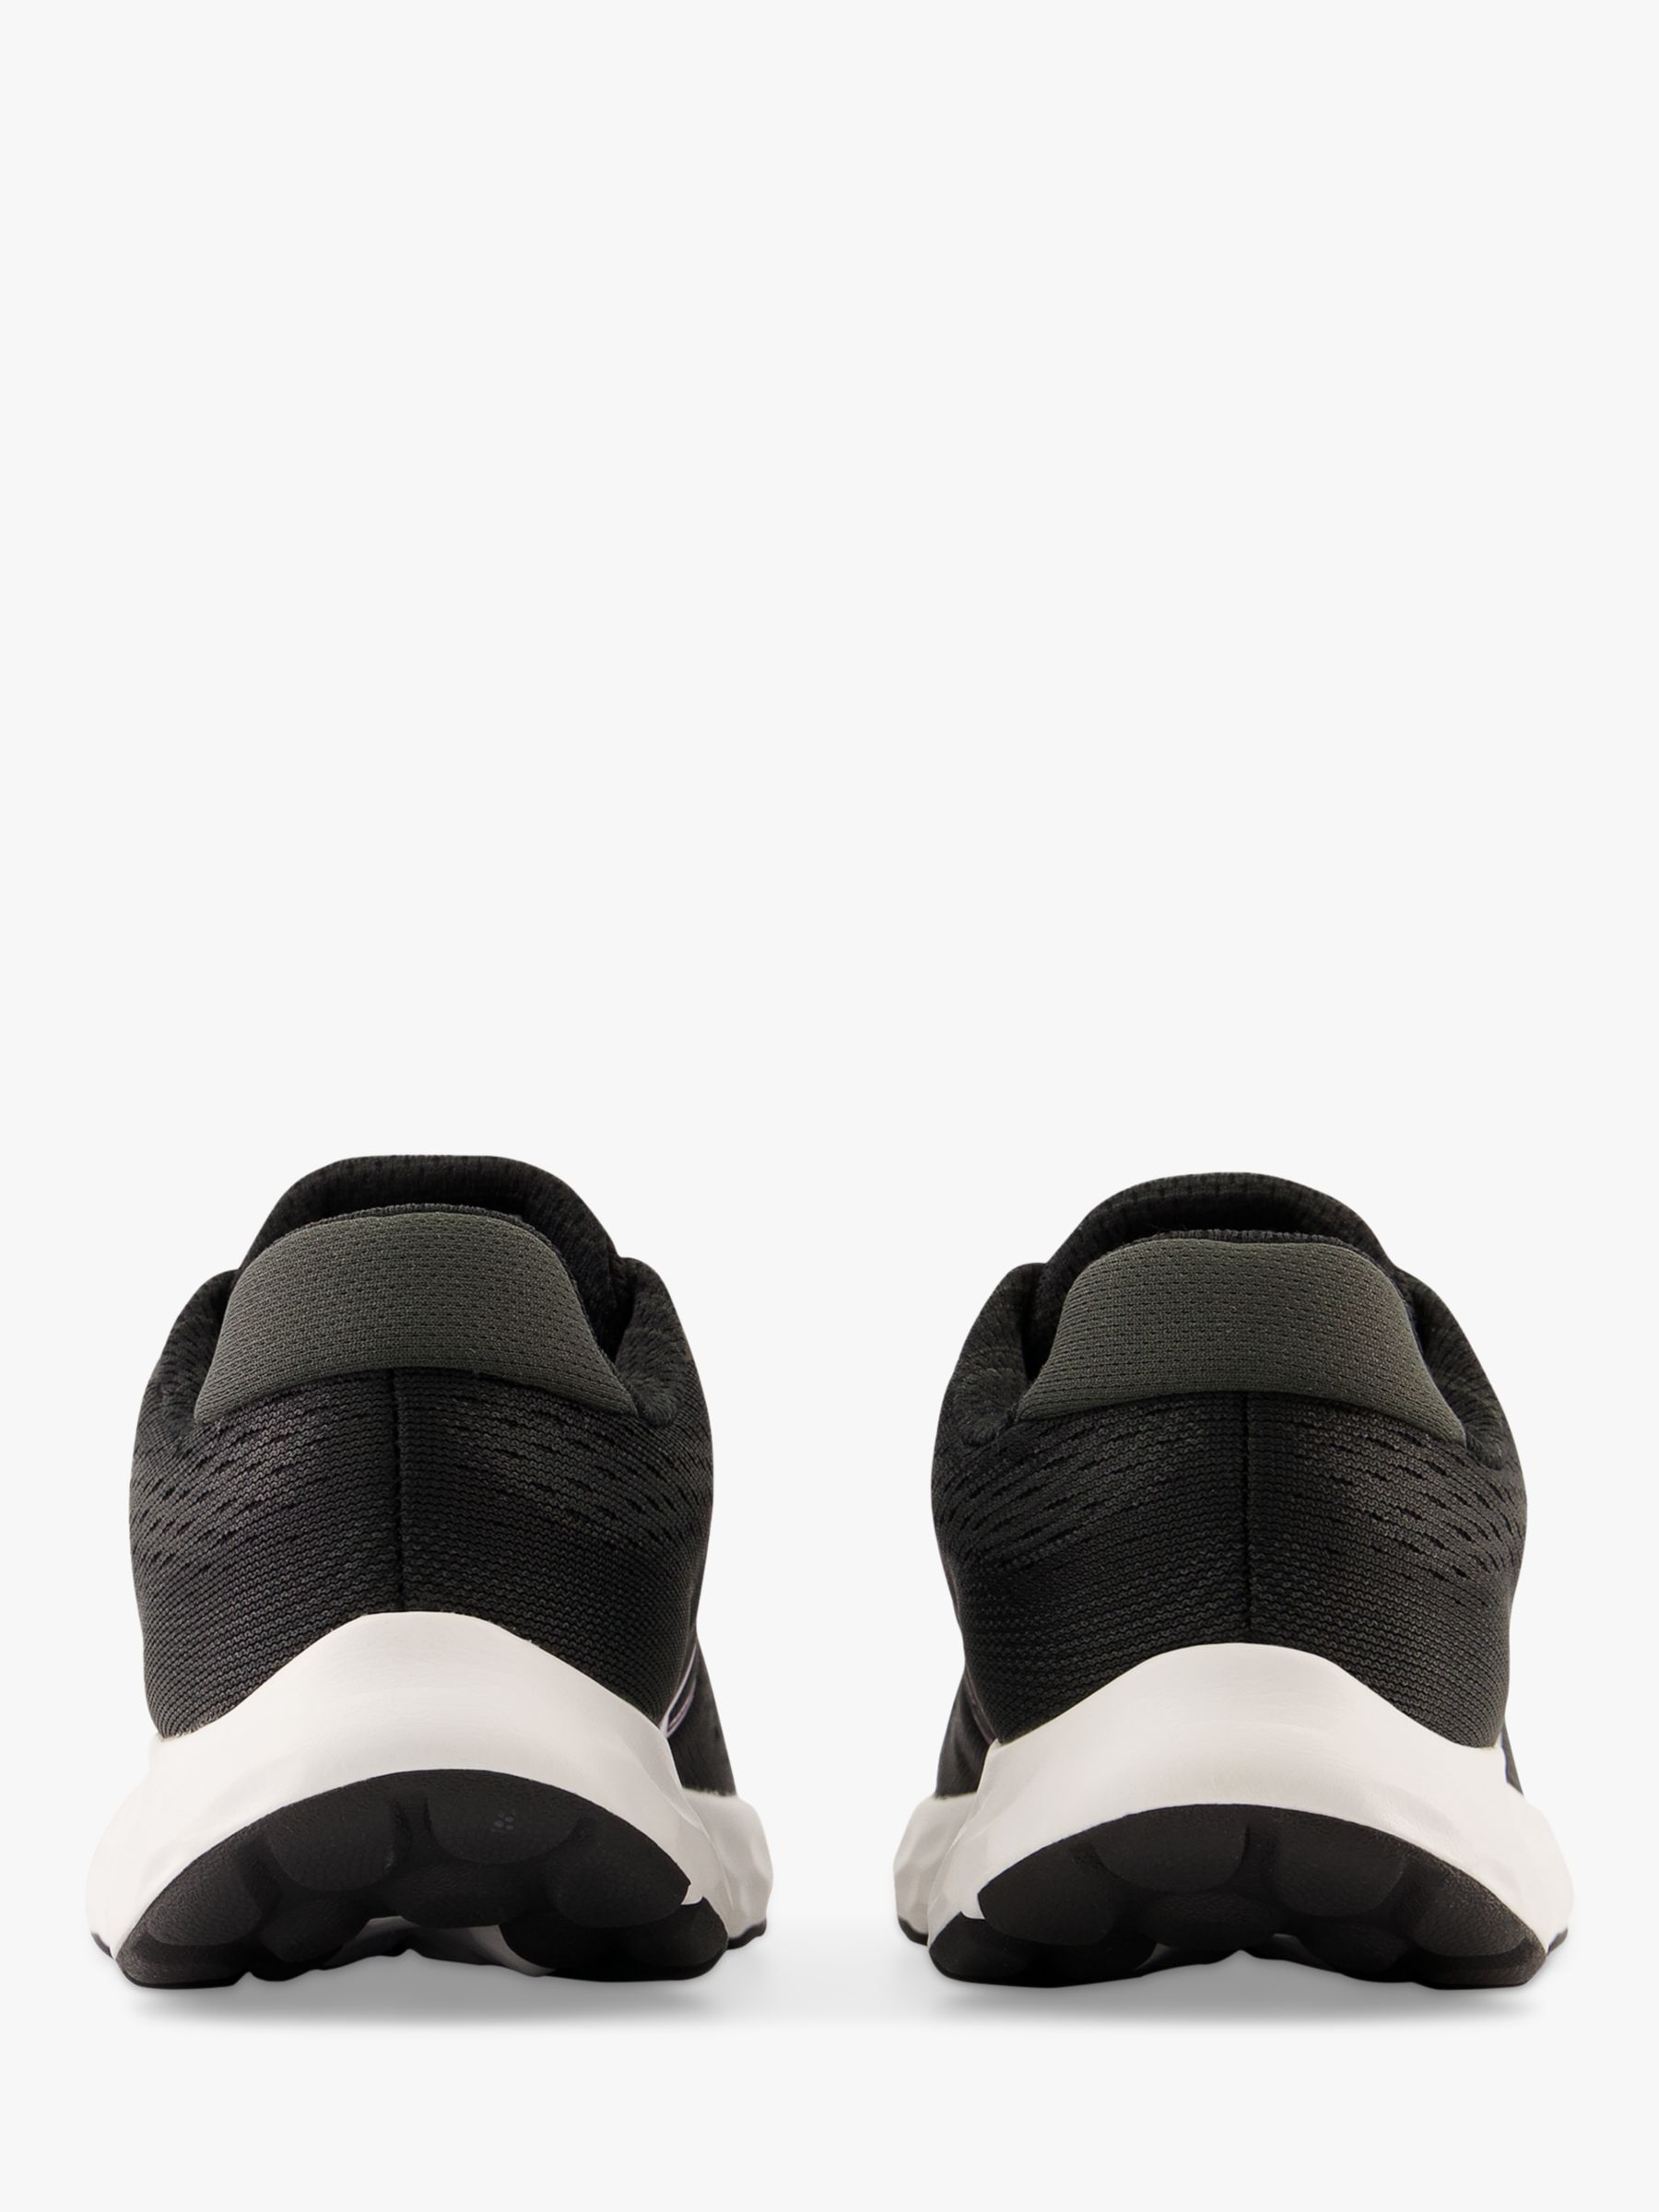 New Balance 520v8 Women's Running Shoes, Black/White at John Lewis ...